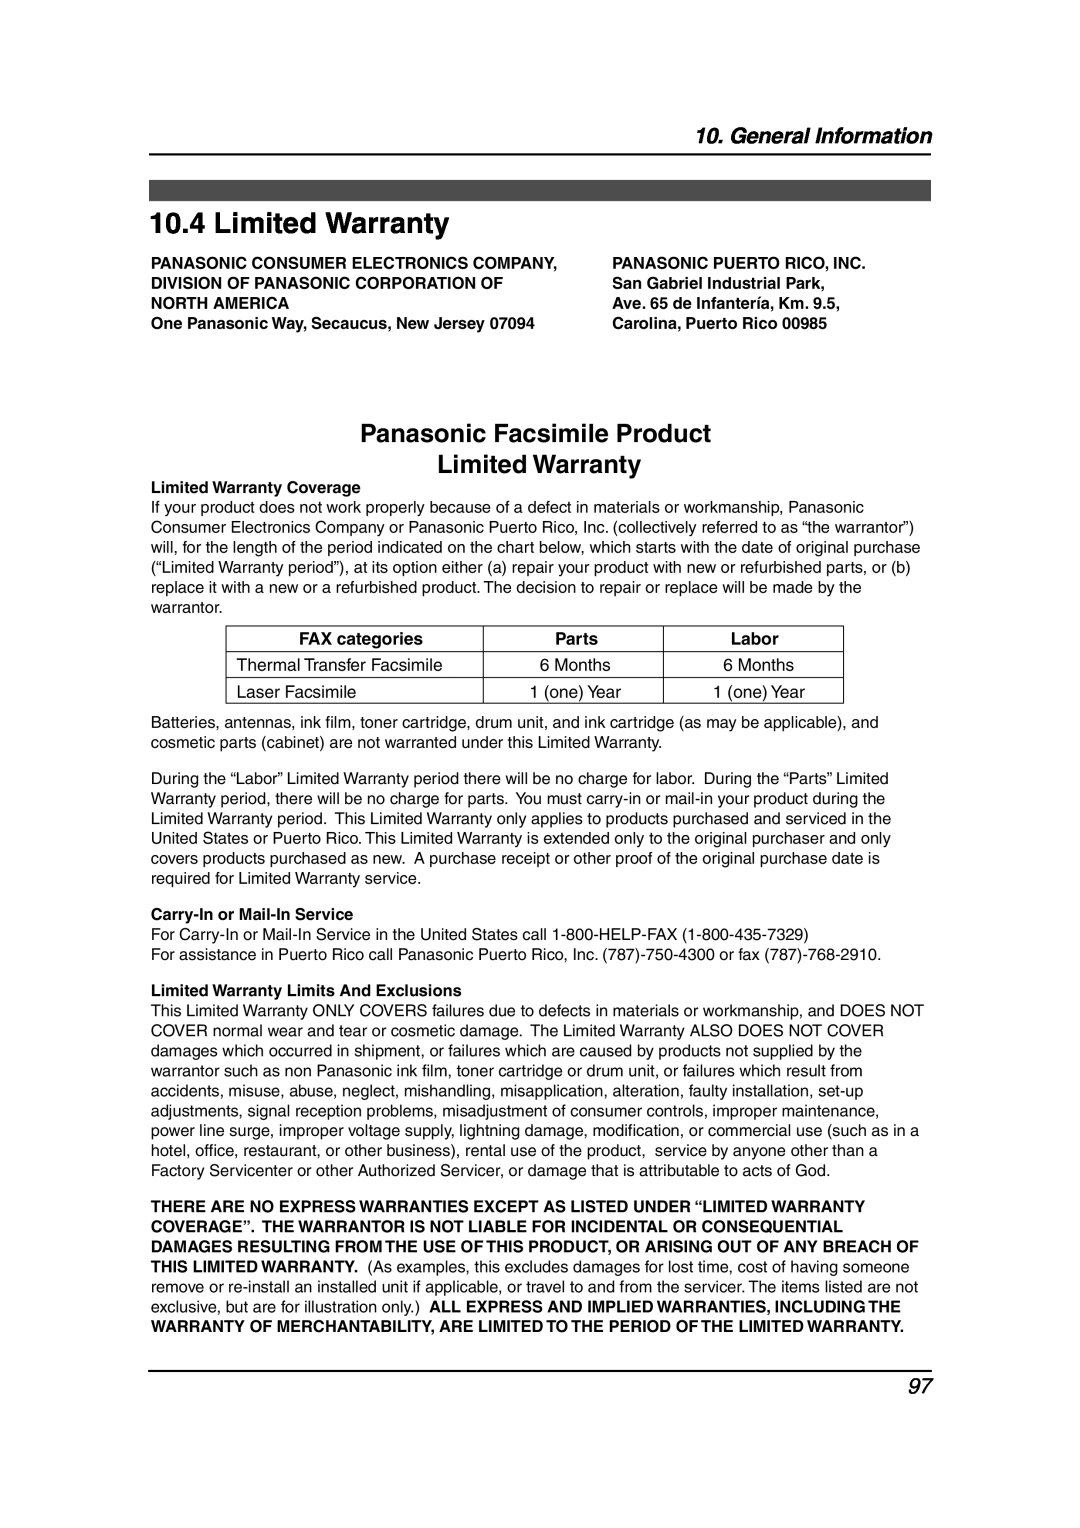 Panasonic KX-FLB851 Panasonic Facsimile Product Limited Warranty, FAX categories, Parts, Labor, General Information 